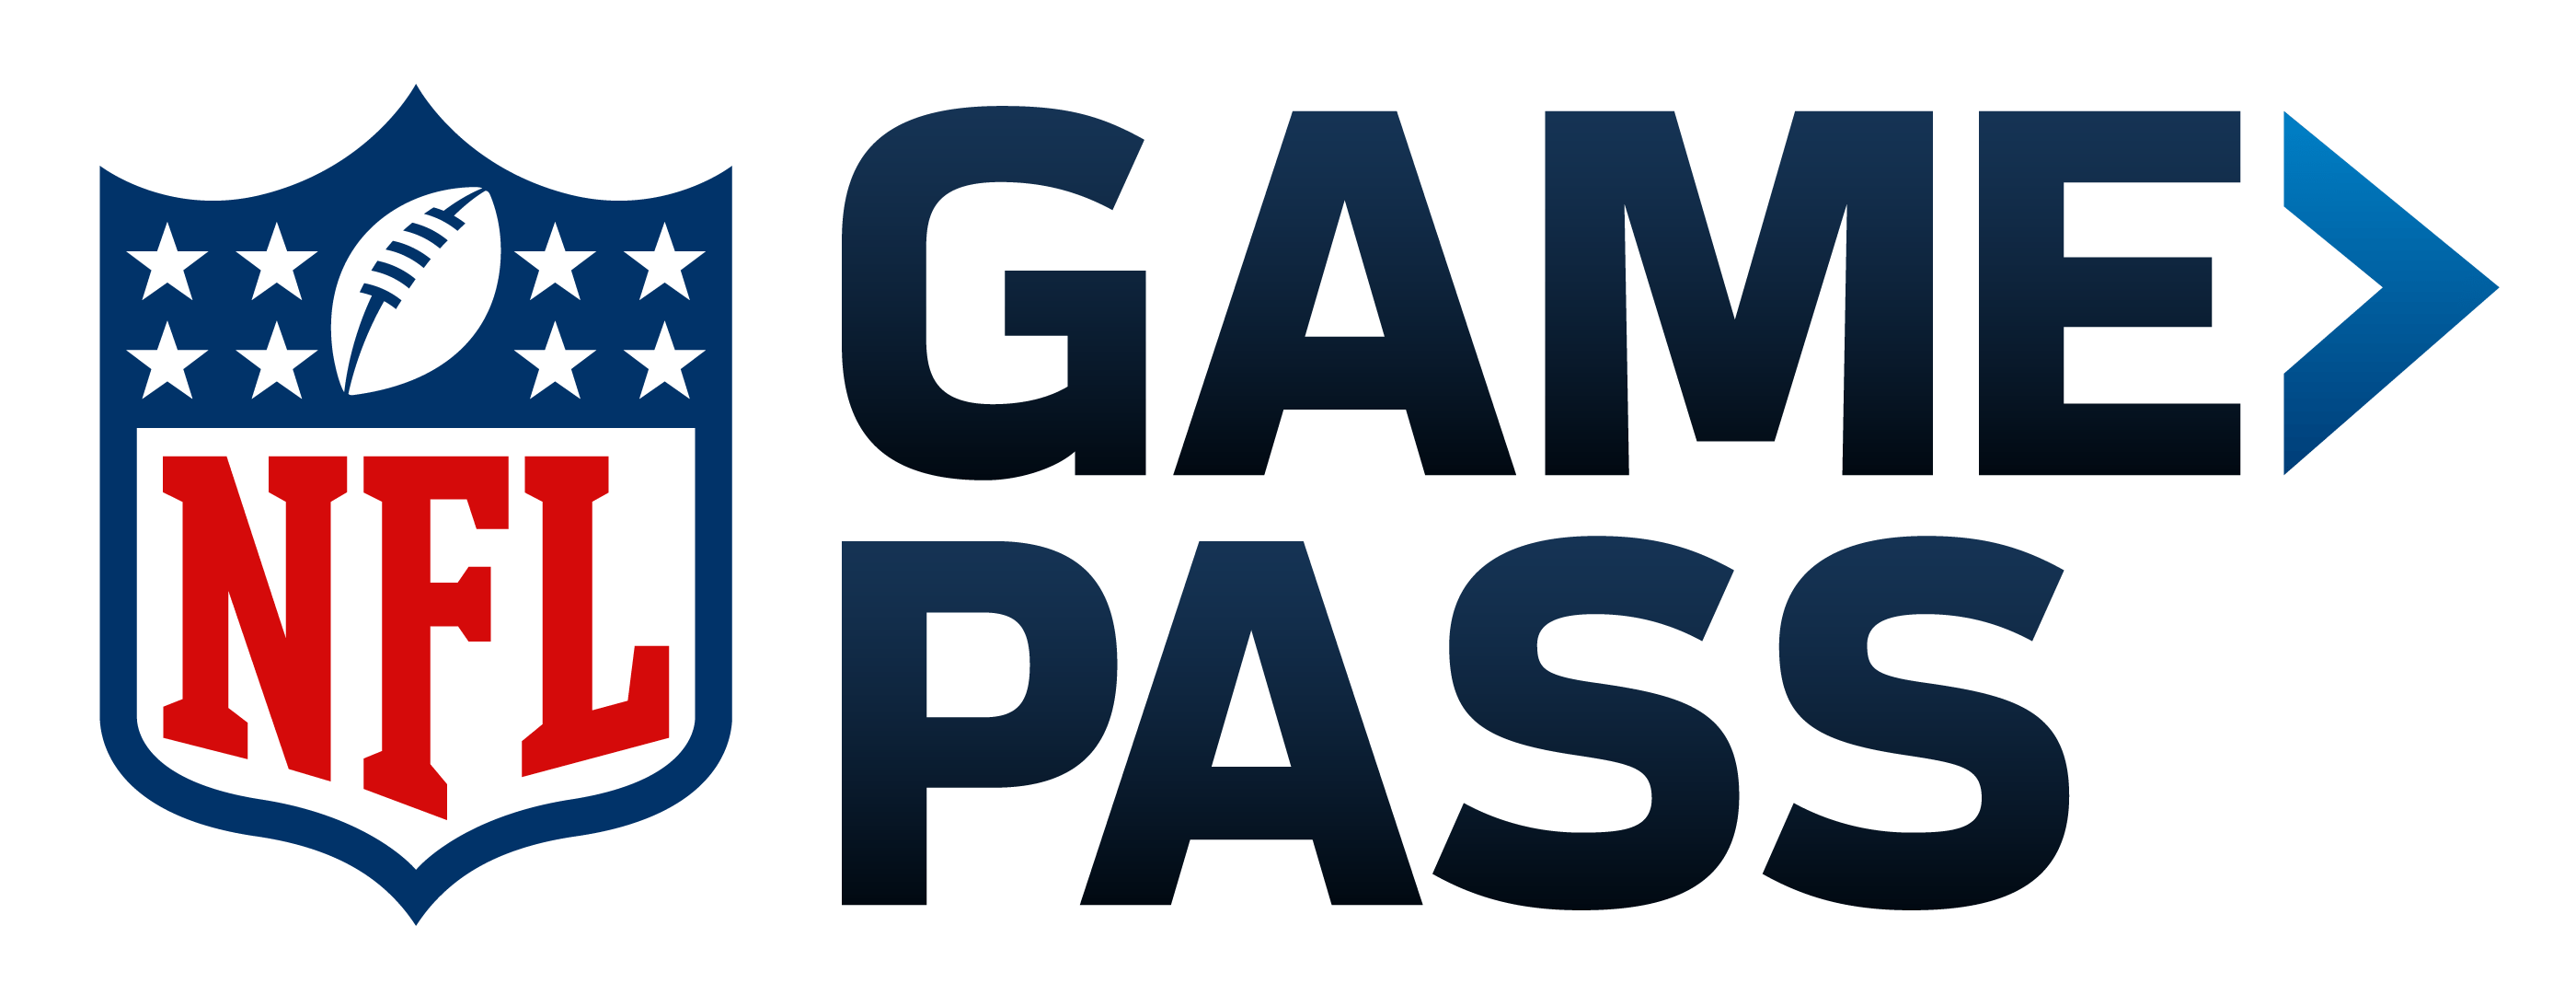 sunday nfl game pass